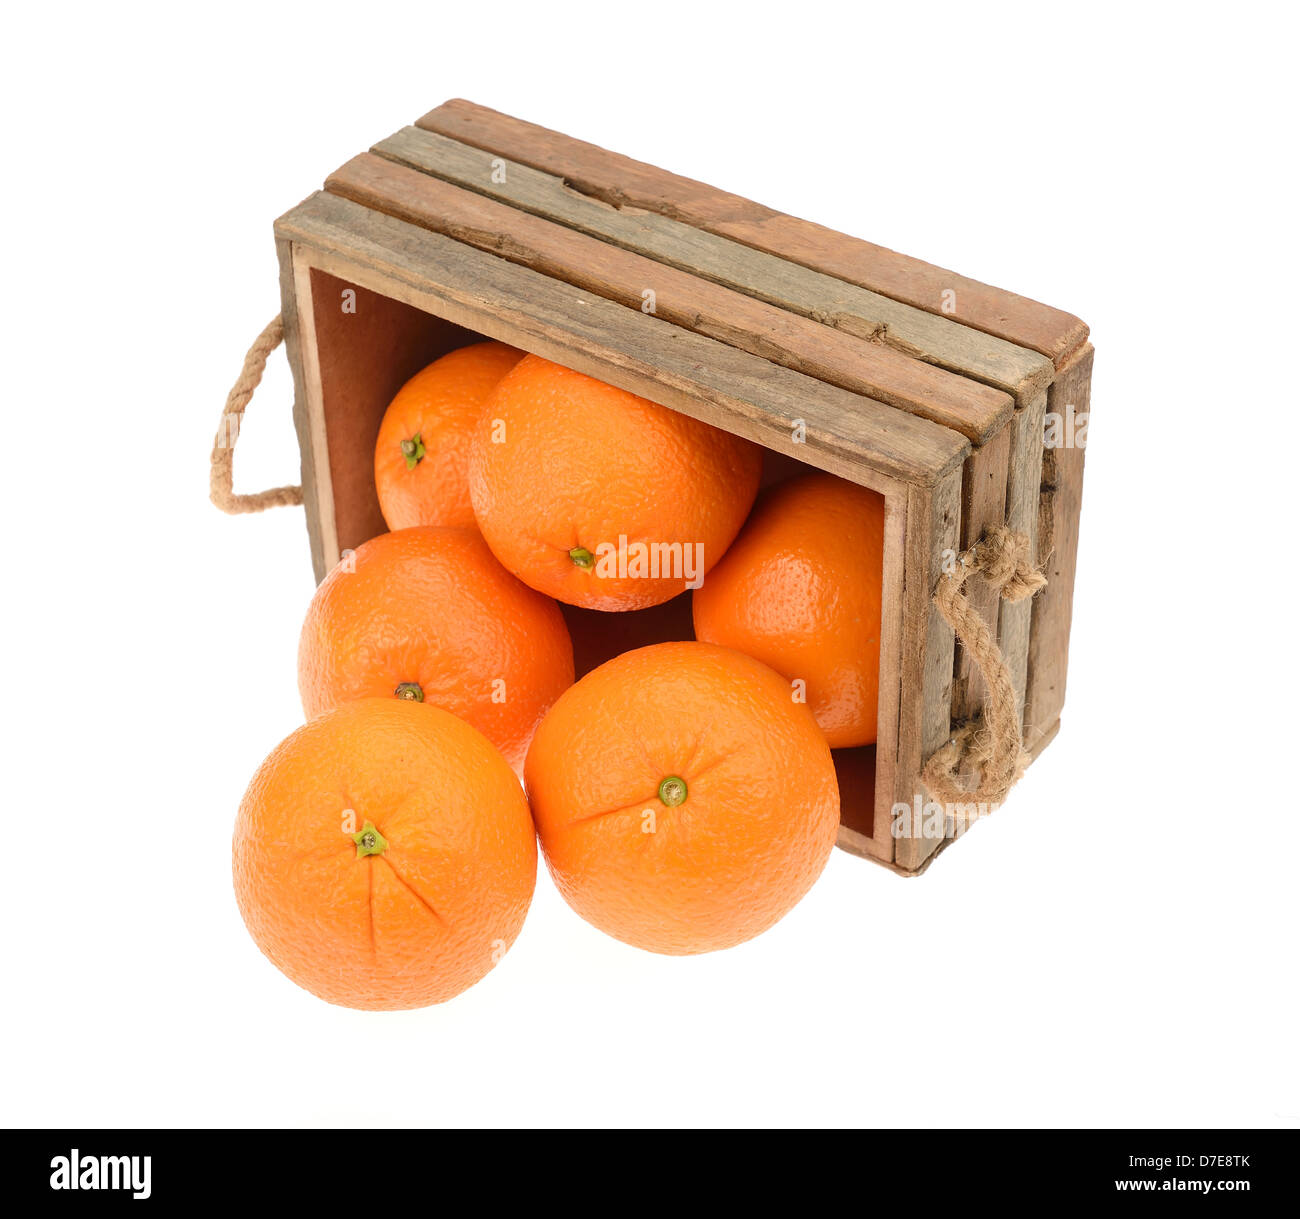 https://c8.alamy.com/comp/D7E8TK/fresh-oranges-in-wooden-box-D7E8TK.jpg